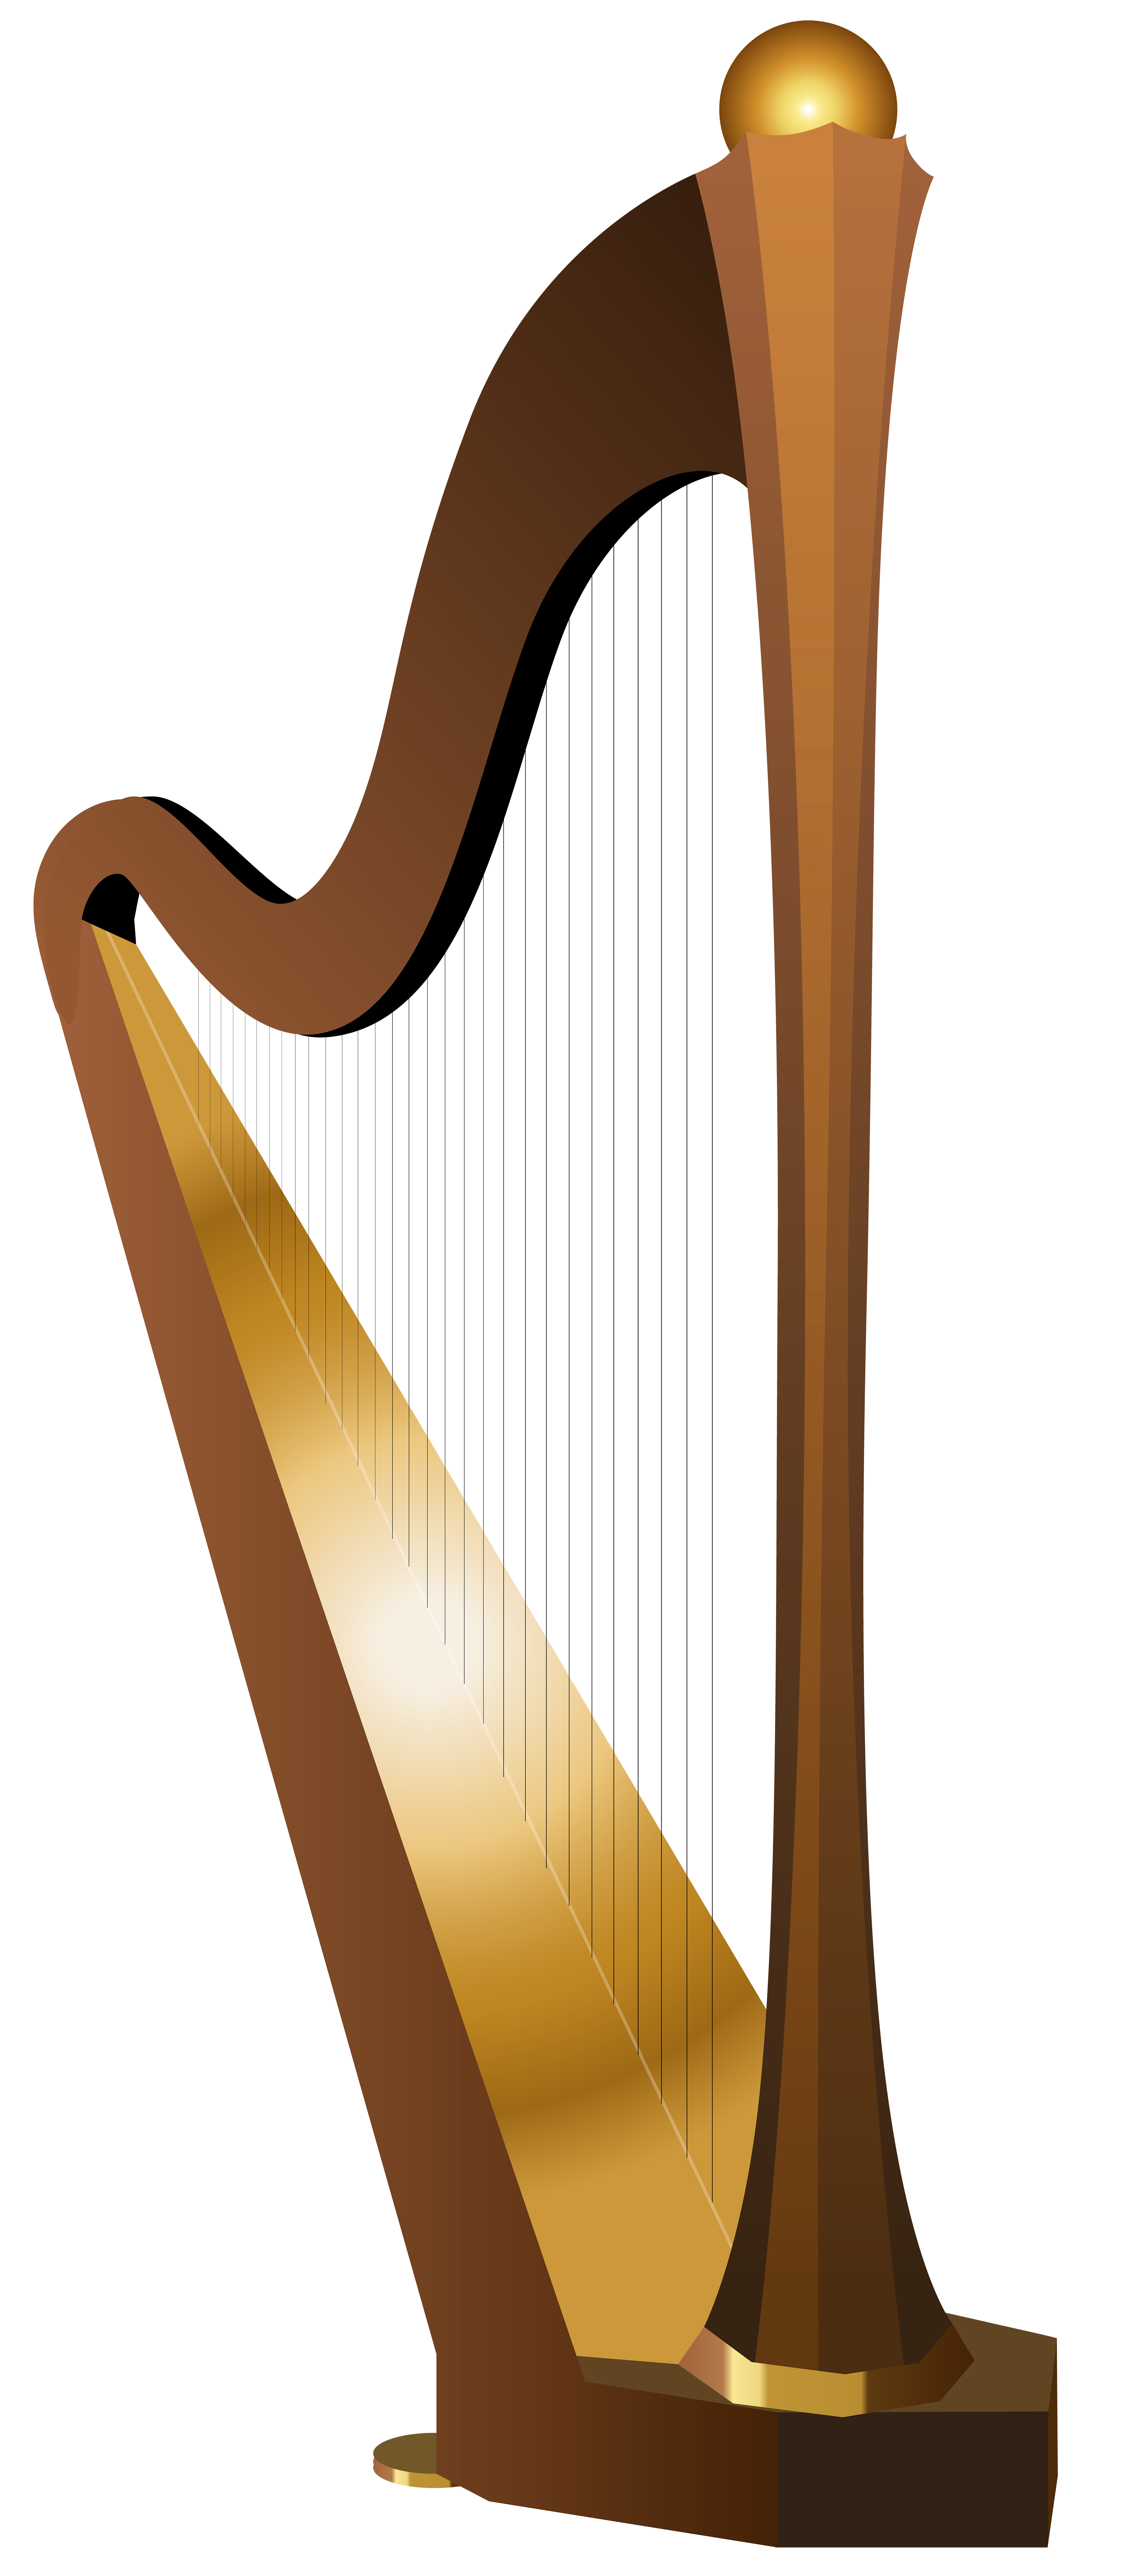 Harp Transparent Image PNG Image